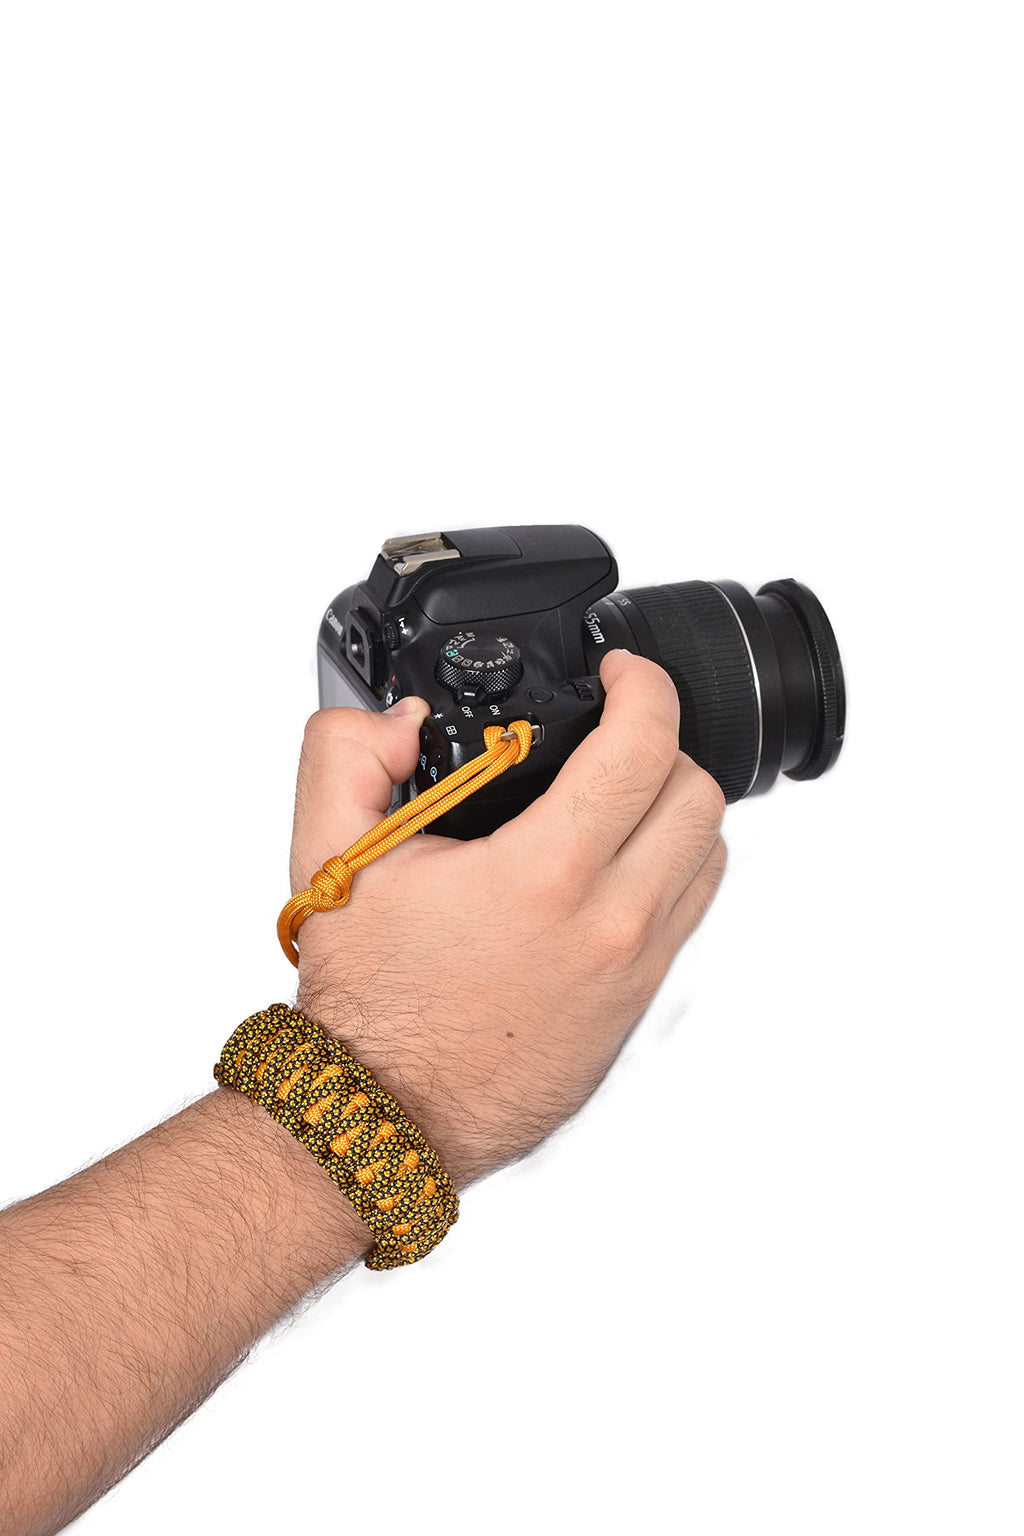  [AUSTRALIA] - Camera Wrist Strap - Secure camera strap for you camera DSLR and Mirrorless Cameras-Camera Strap for Phortographers Gold-diamond Gold